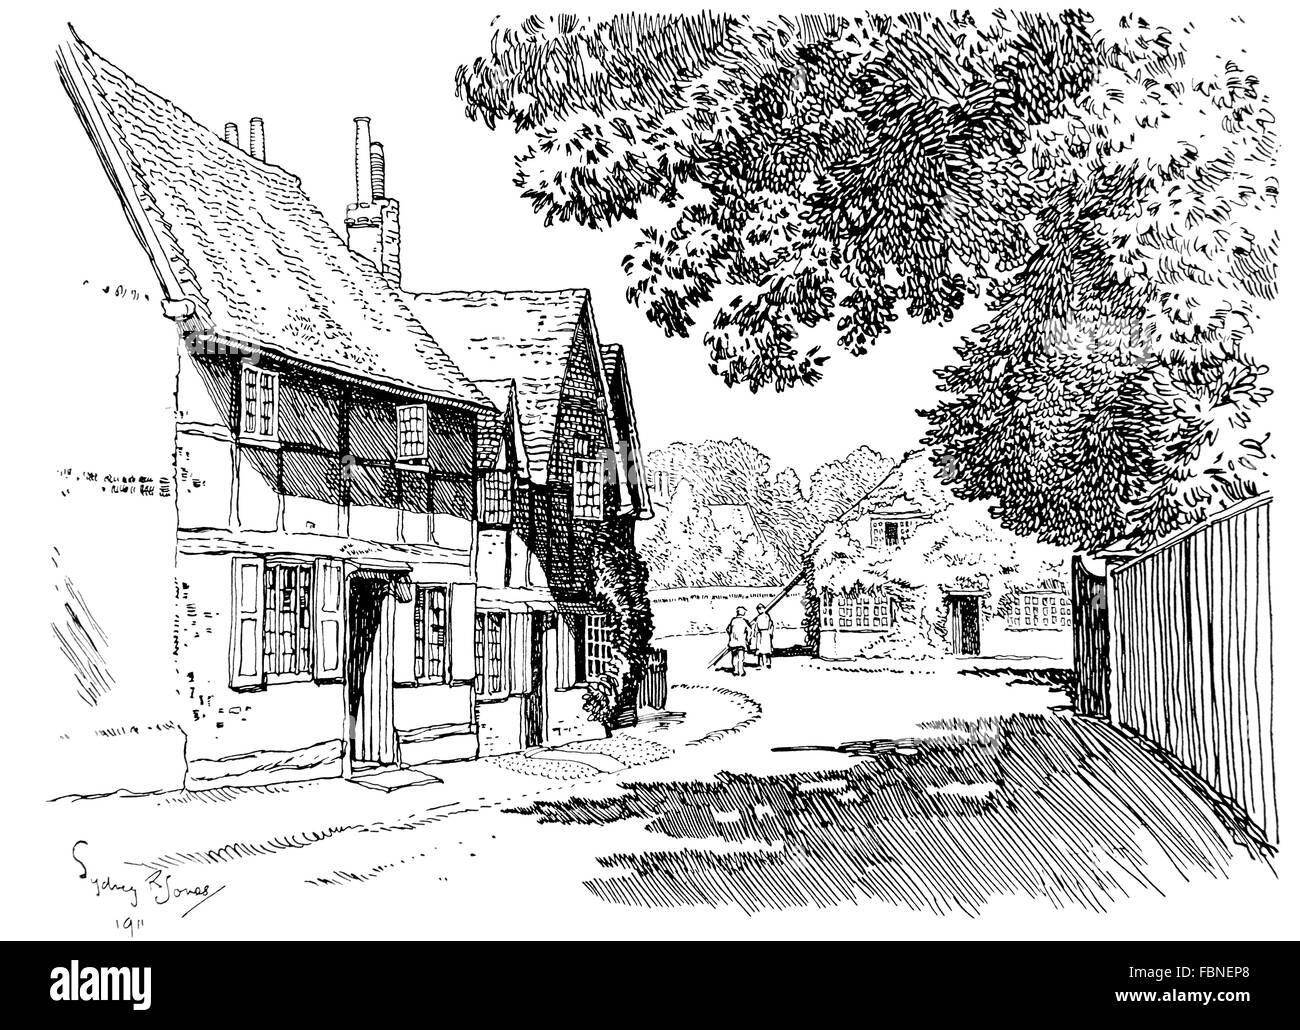 UK, England, Berkshire, Sonning village, old cottages in High Street, 1911 line illustration by, Sydney R Jones Stock Photo